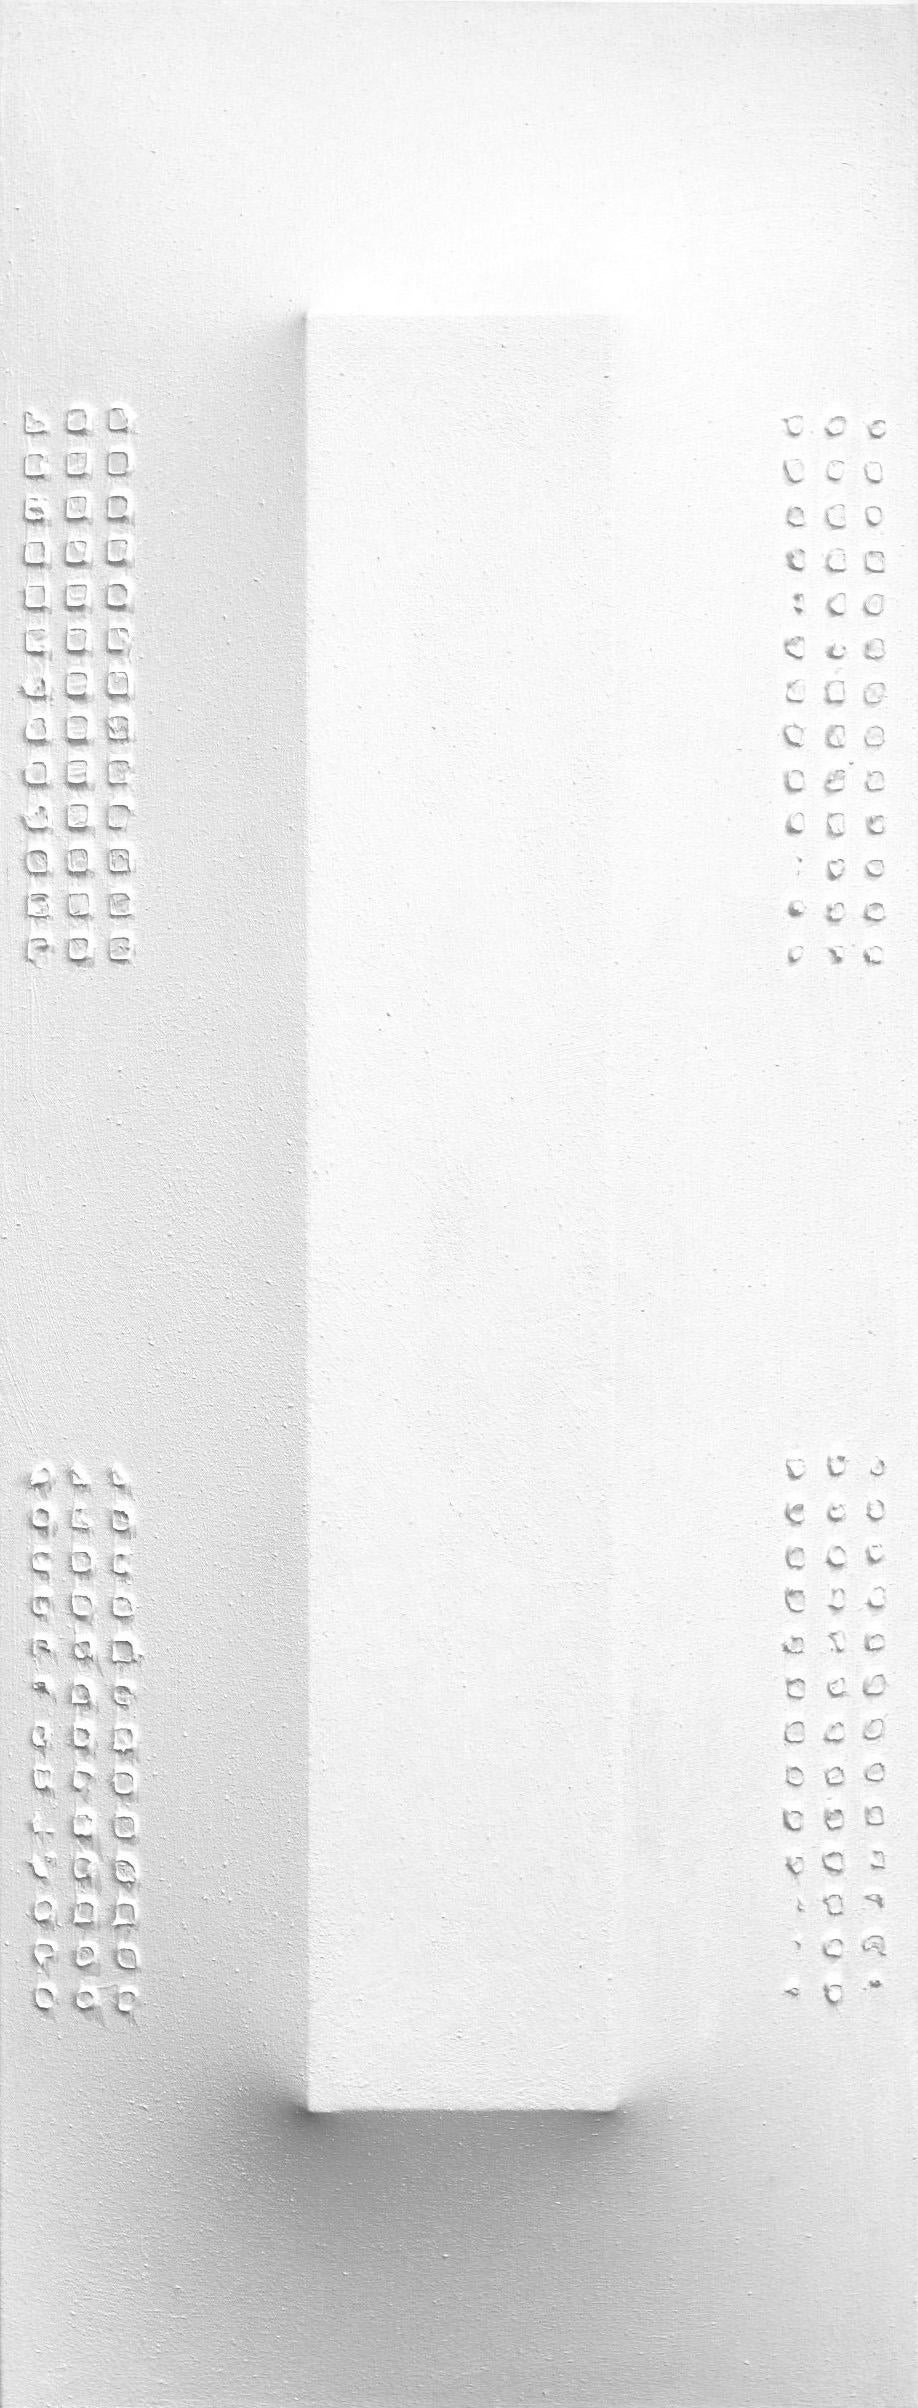 Len Klikunas Abstract Sculpture - Lisa Marie 444  - Original Tall White Abstract Minimalist Wall Sculpture Artwork